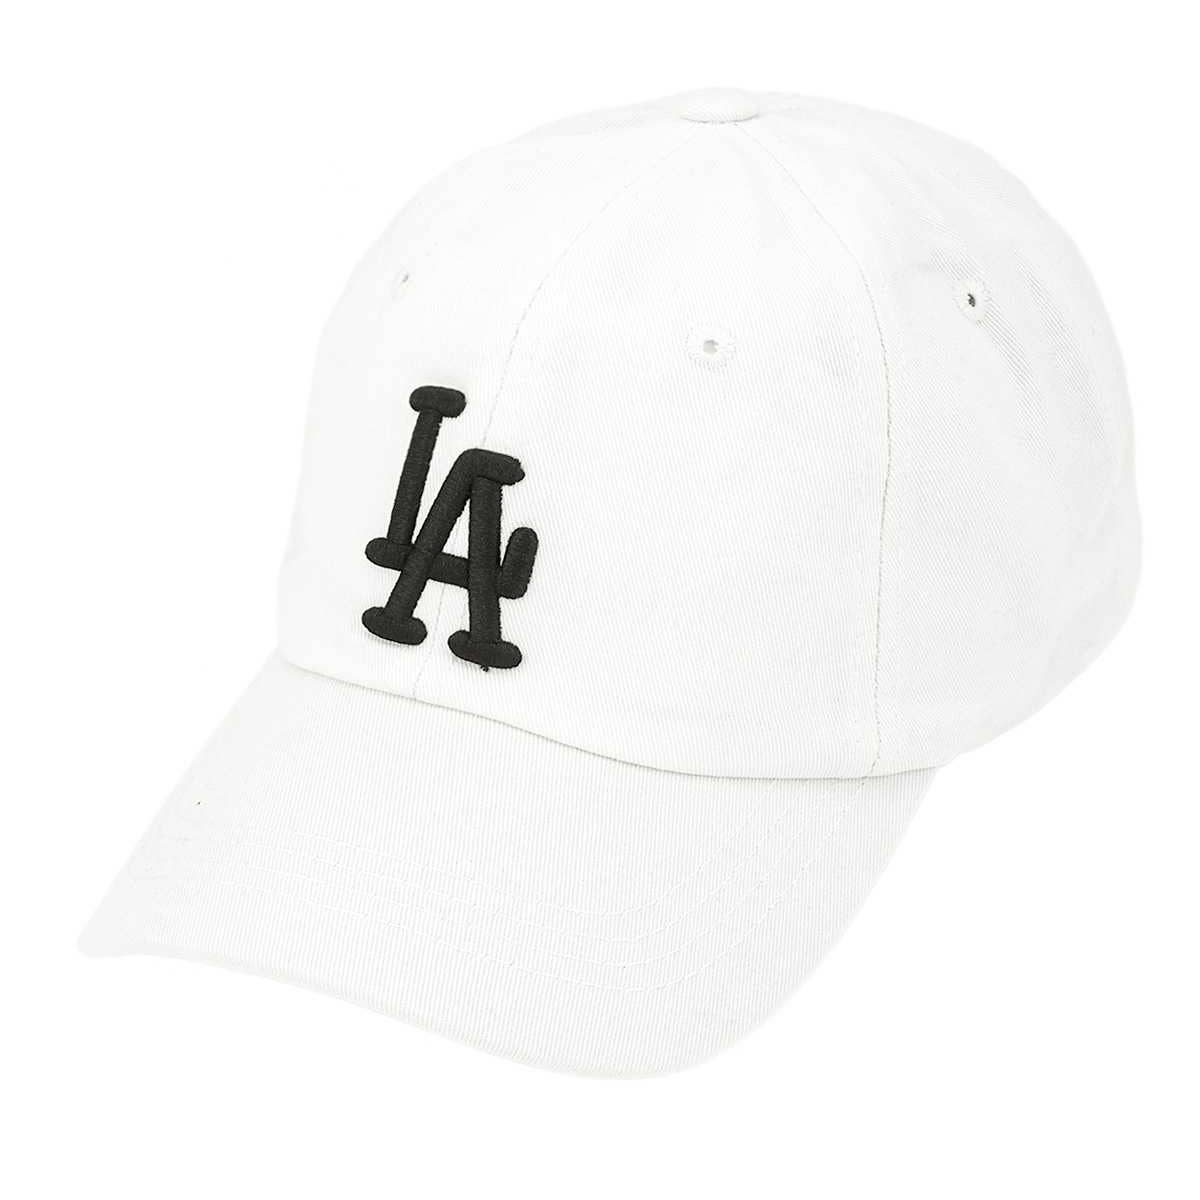 LA Embroidery Pigment Baseball Cap